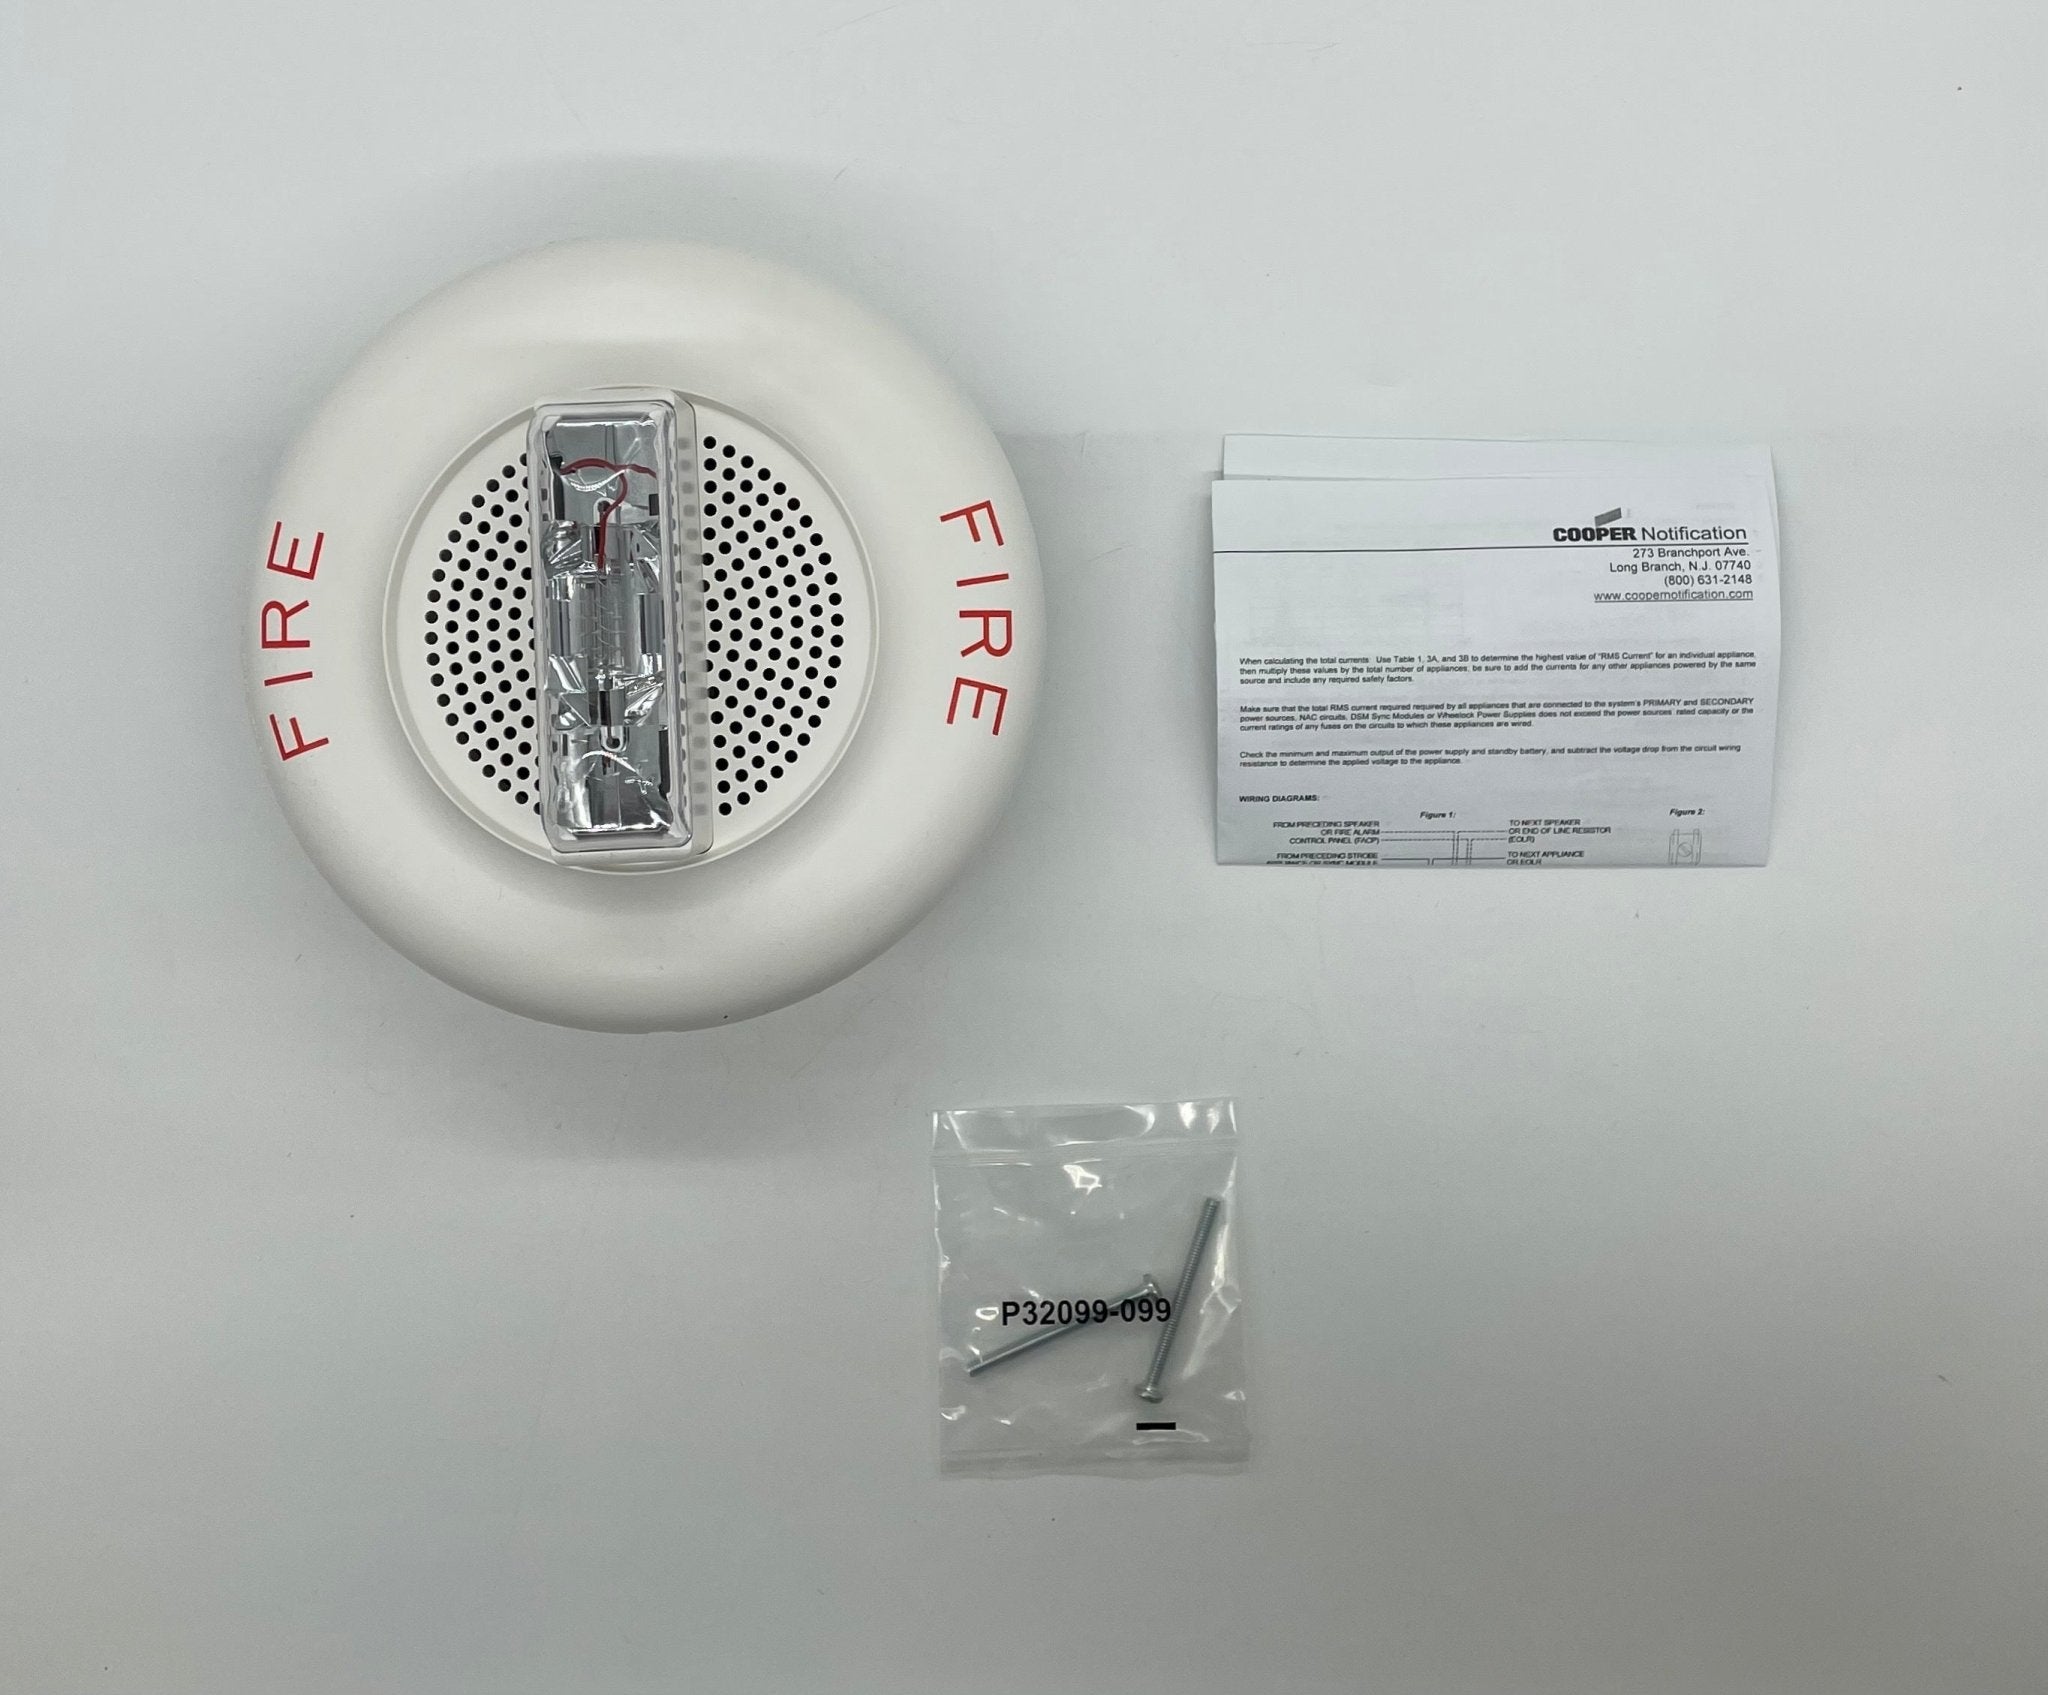 Wheelock E60-24MCC-FW - The Fire Alarm Supplier